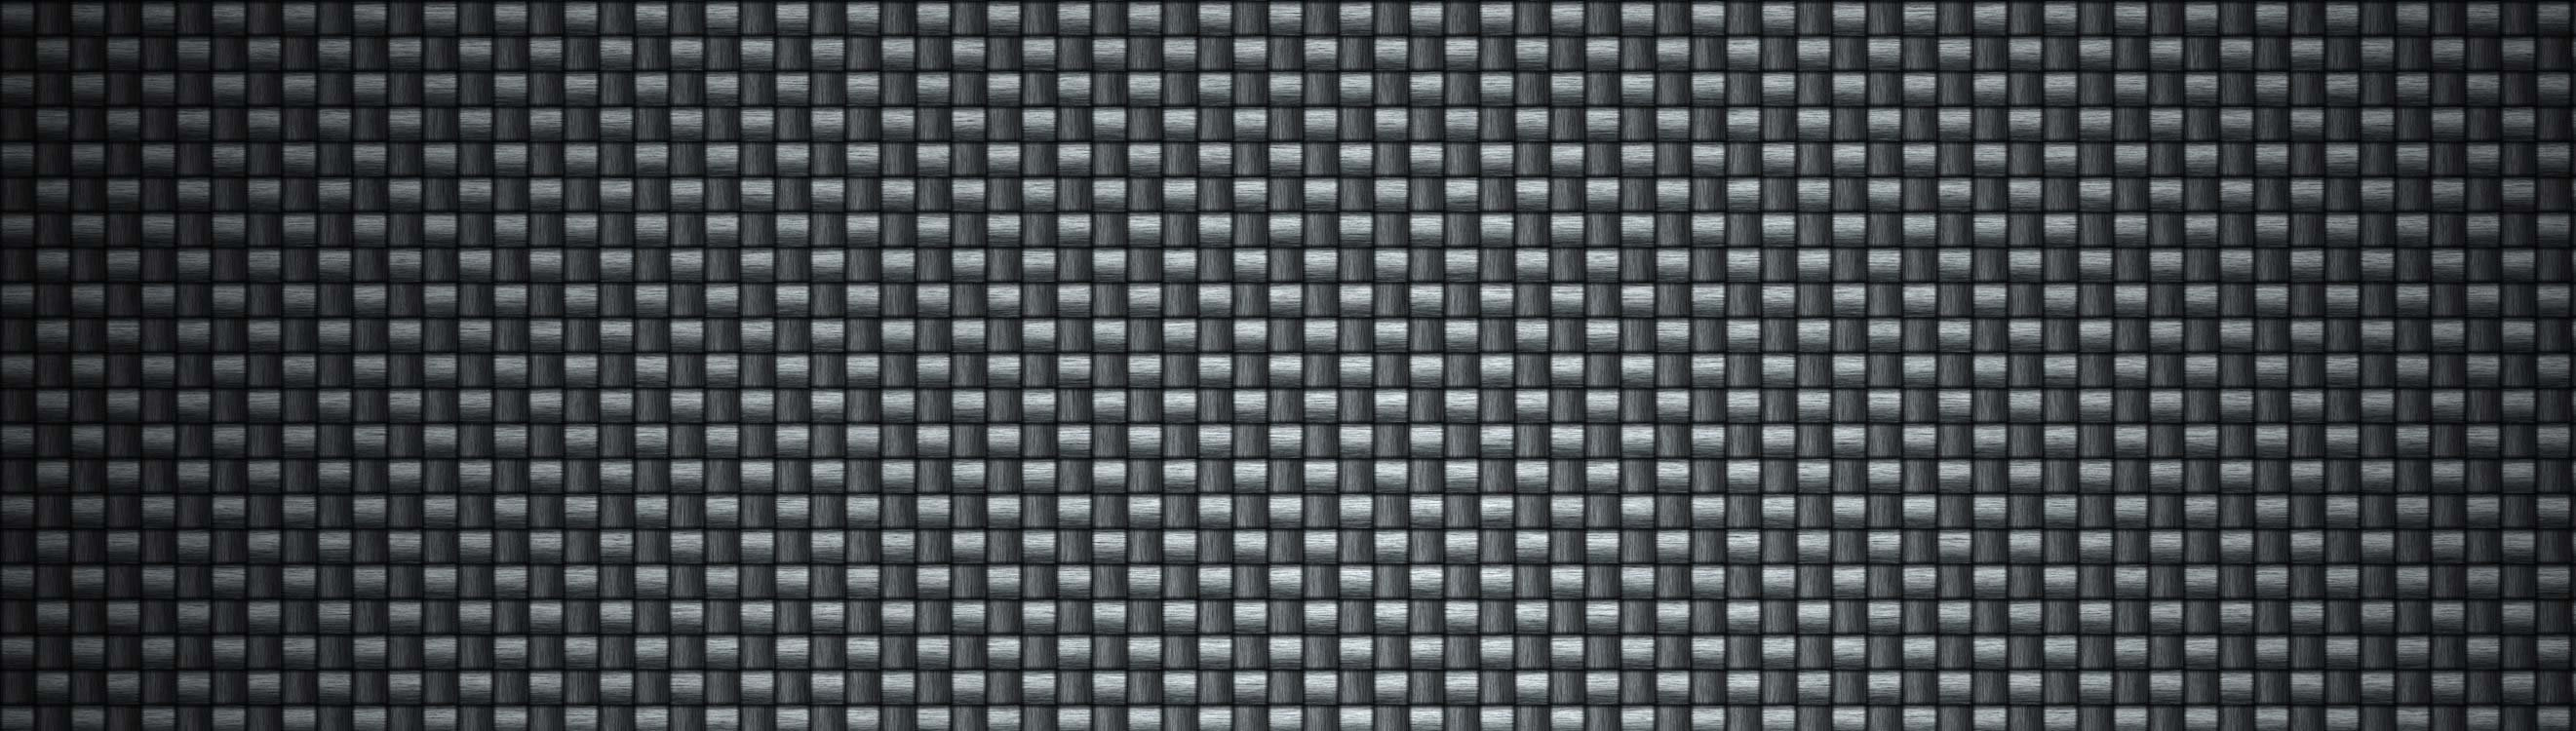 carbon fiber background texture, download background, texture, carbon, carbon fiber, photo